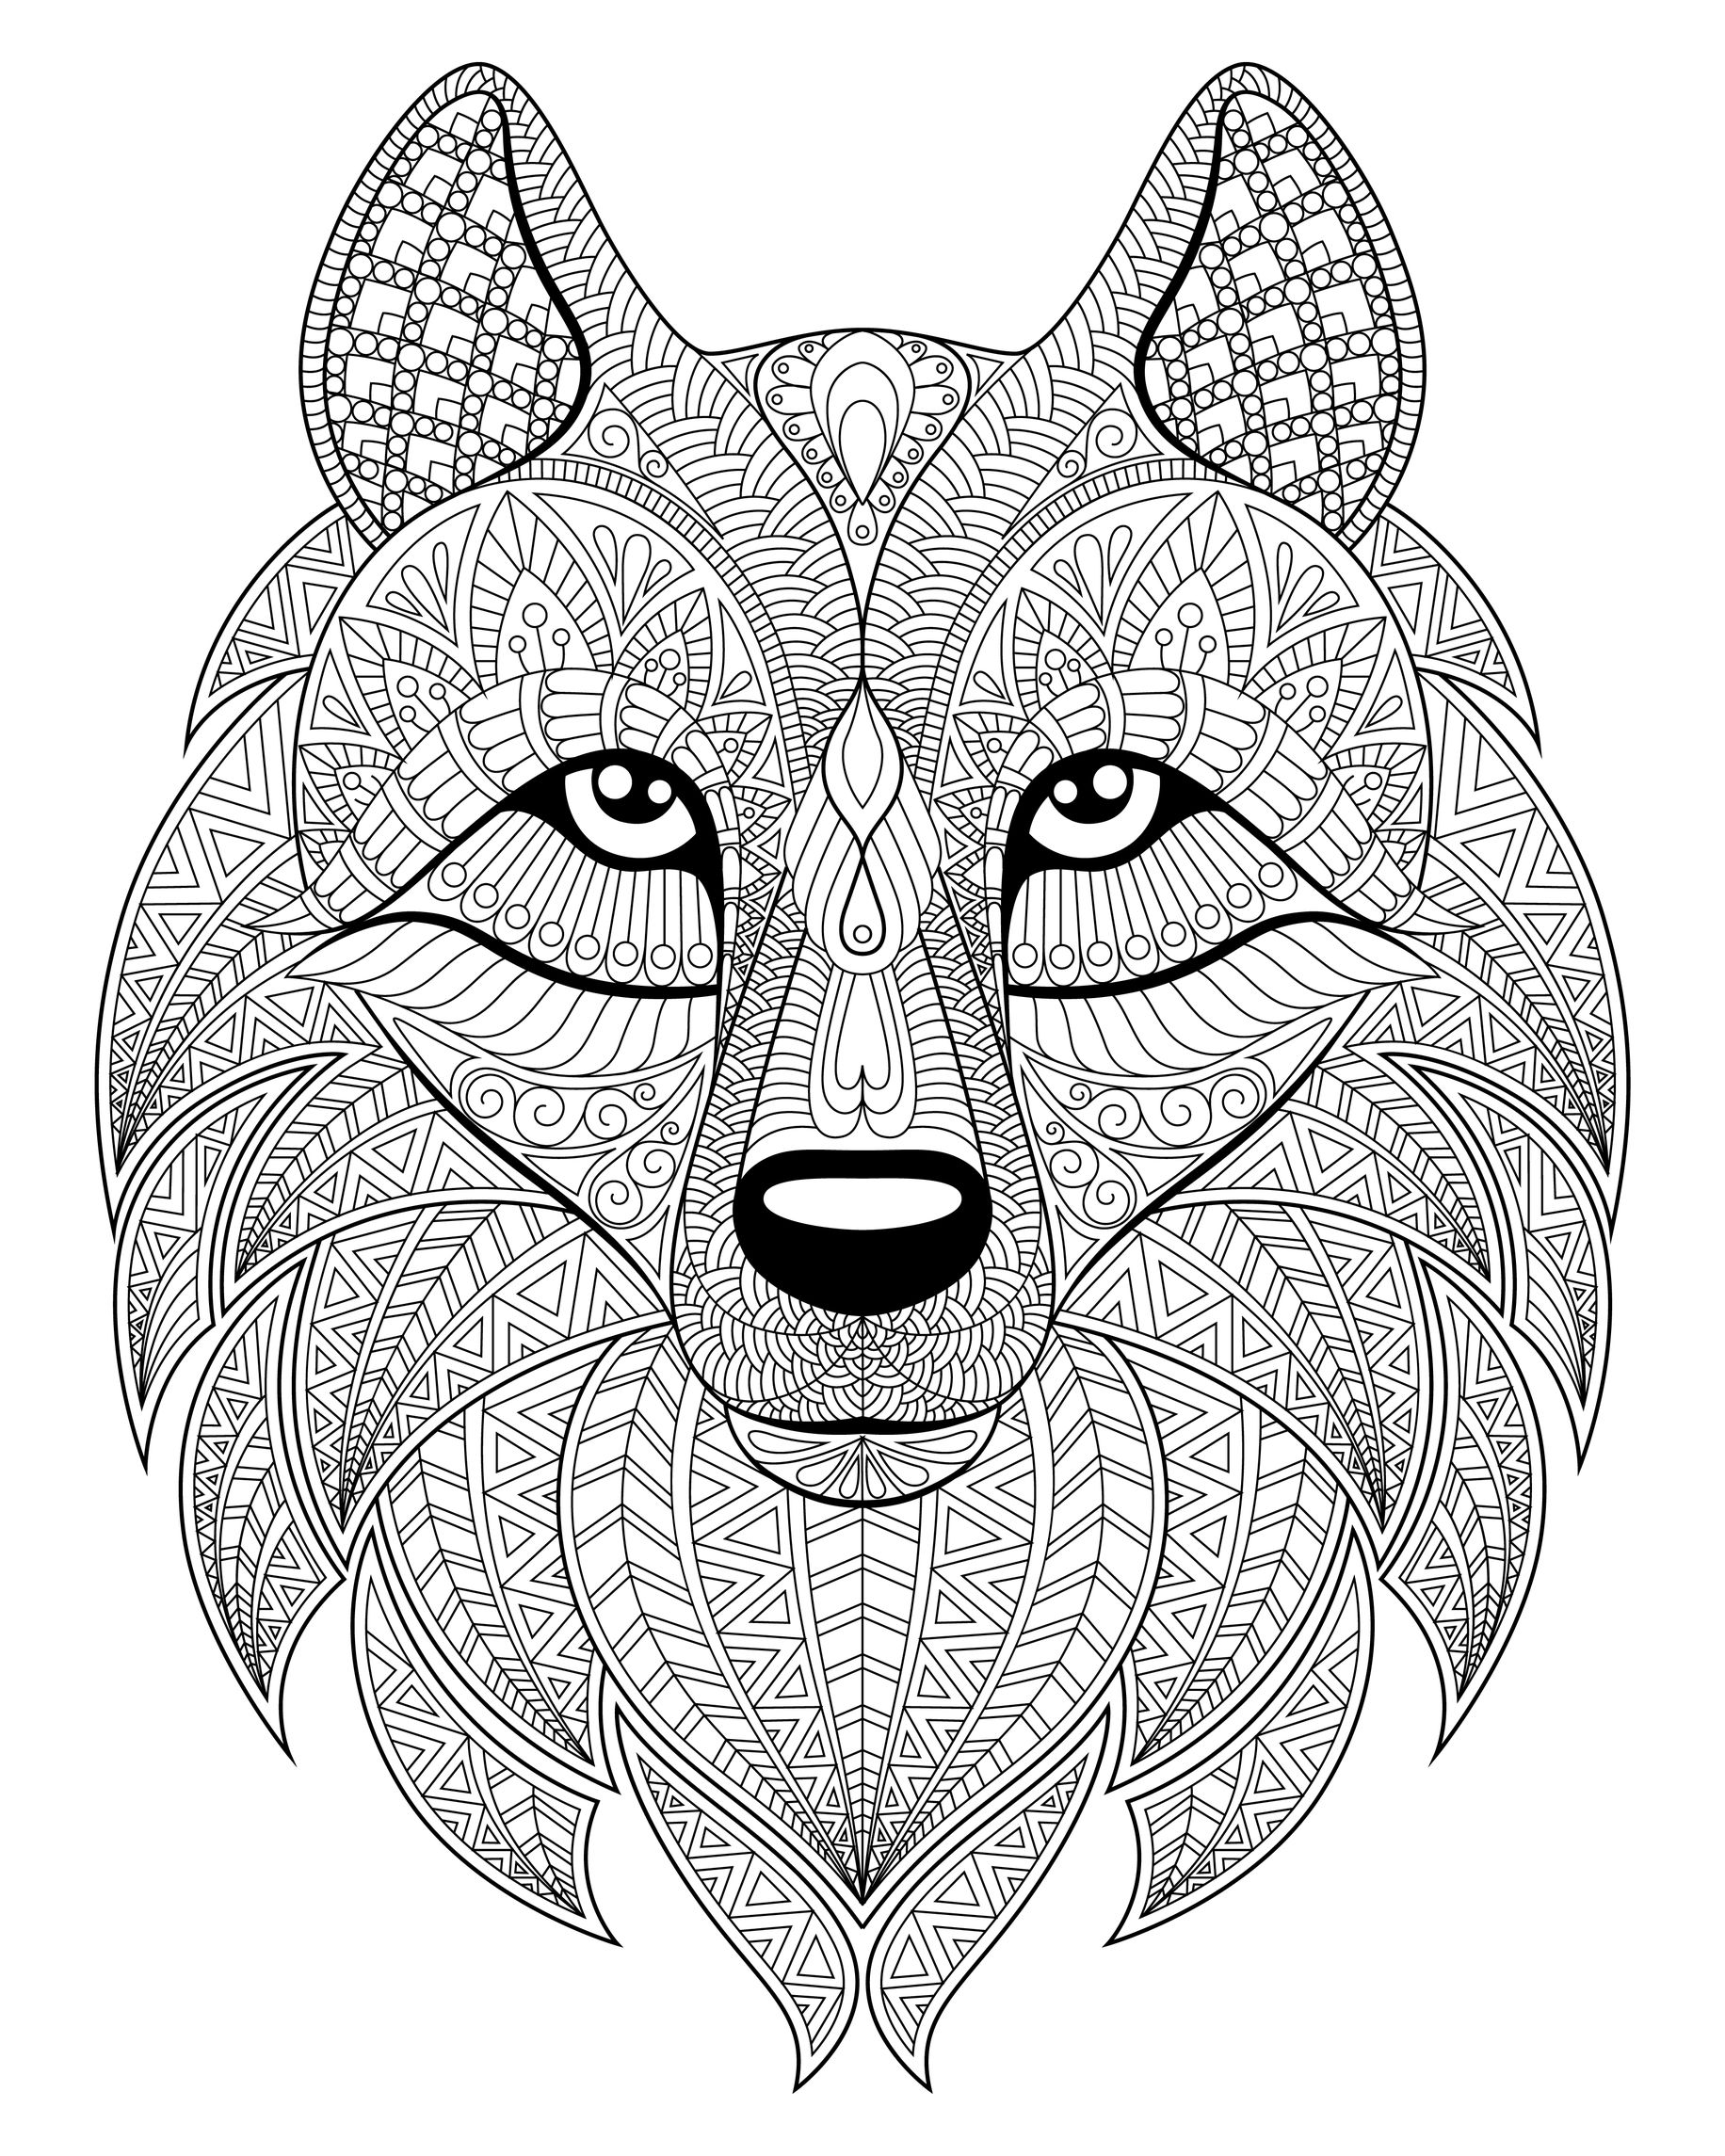 Wolf head, with complex patterns, Artist : alka5051   Source : 123rf